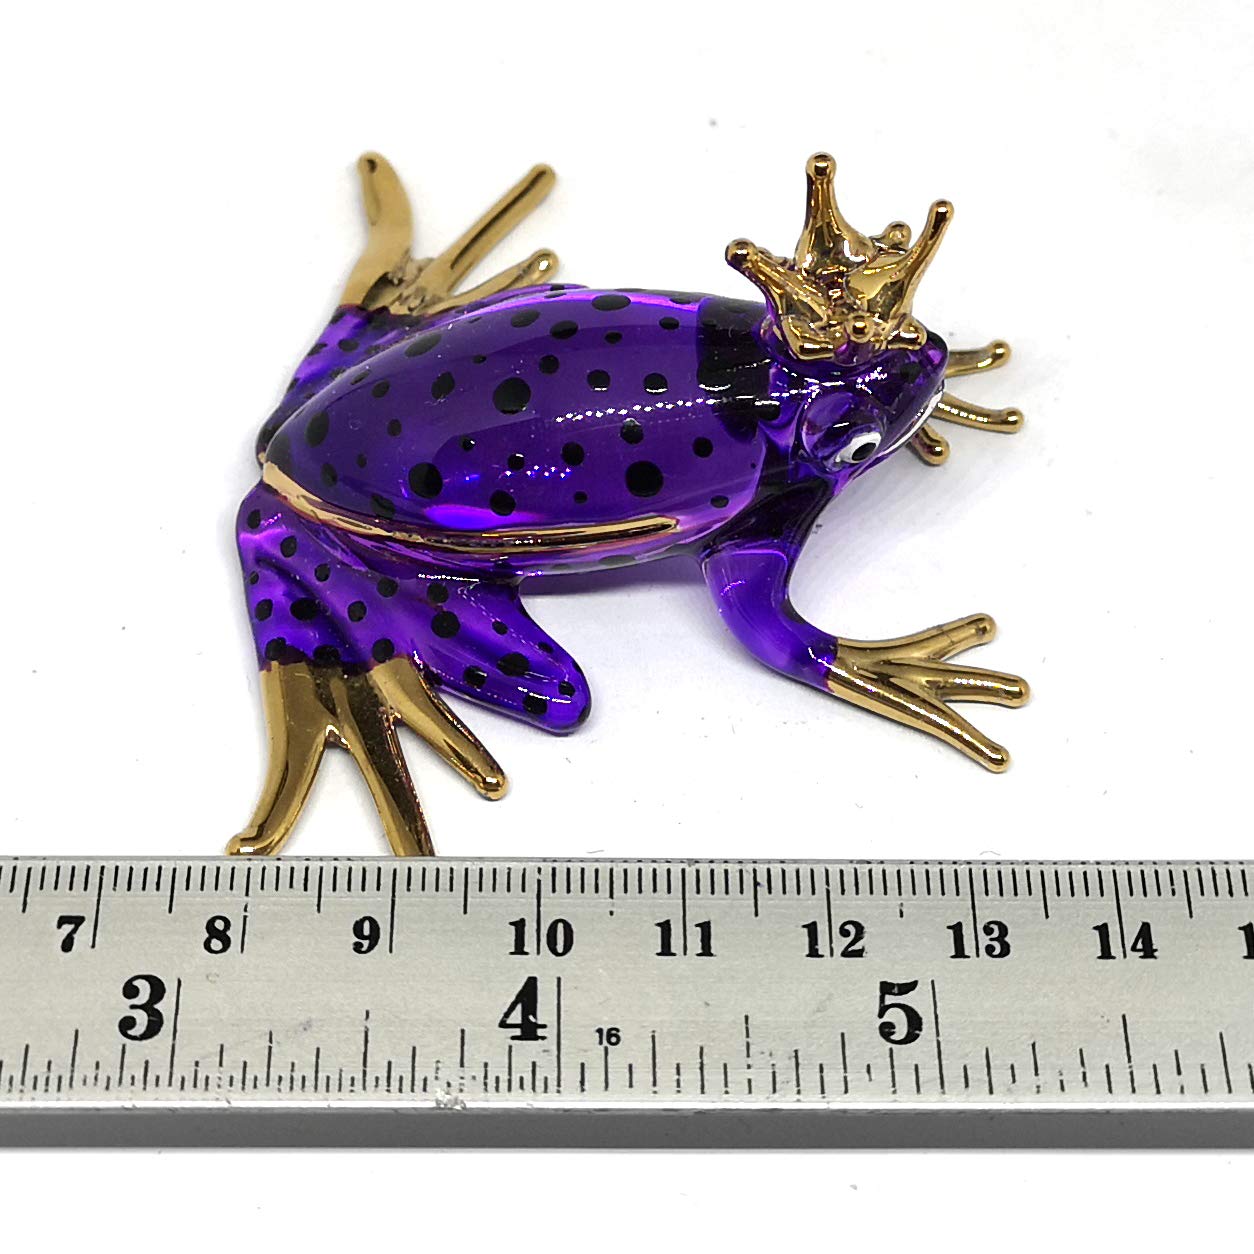 Prince Frog Glass Figurines Collectibles Purple Hand Blown Painted Art Animals Miniature Garden Decor Statue Animal